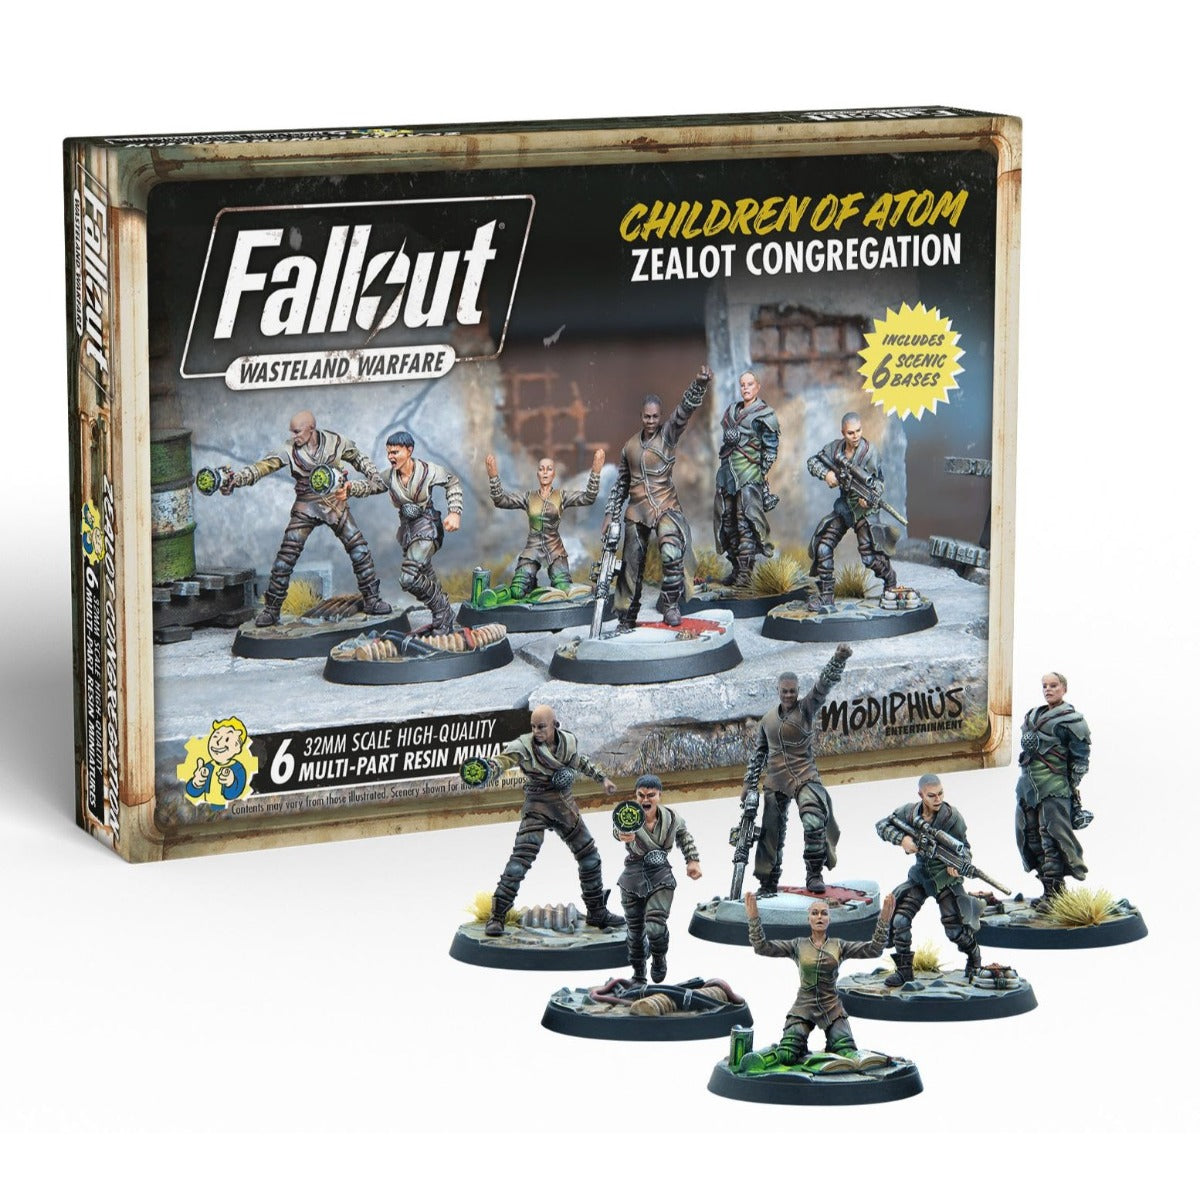 Fallout Wasteland Warfare - Children of Atom Zealot Congregation